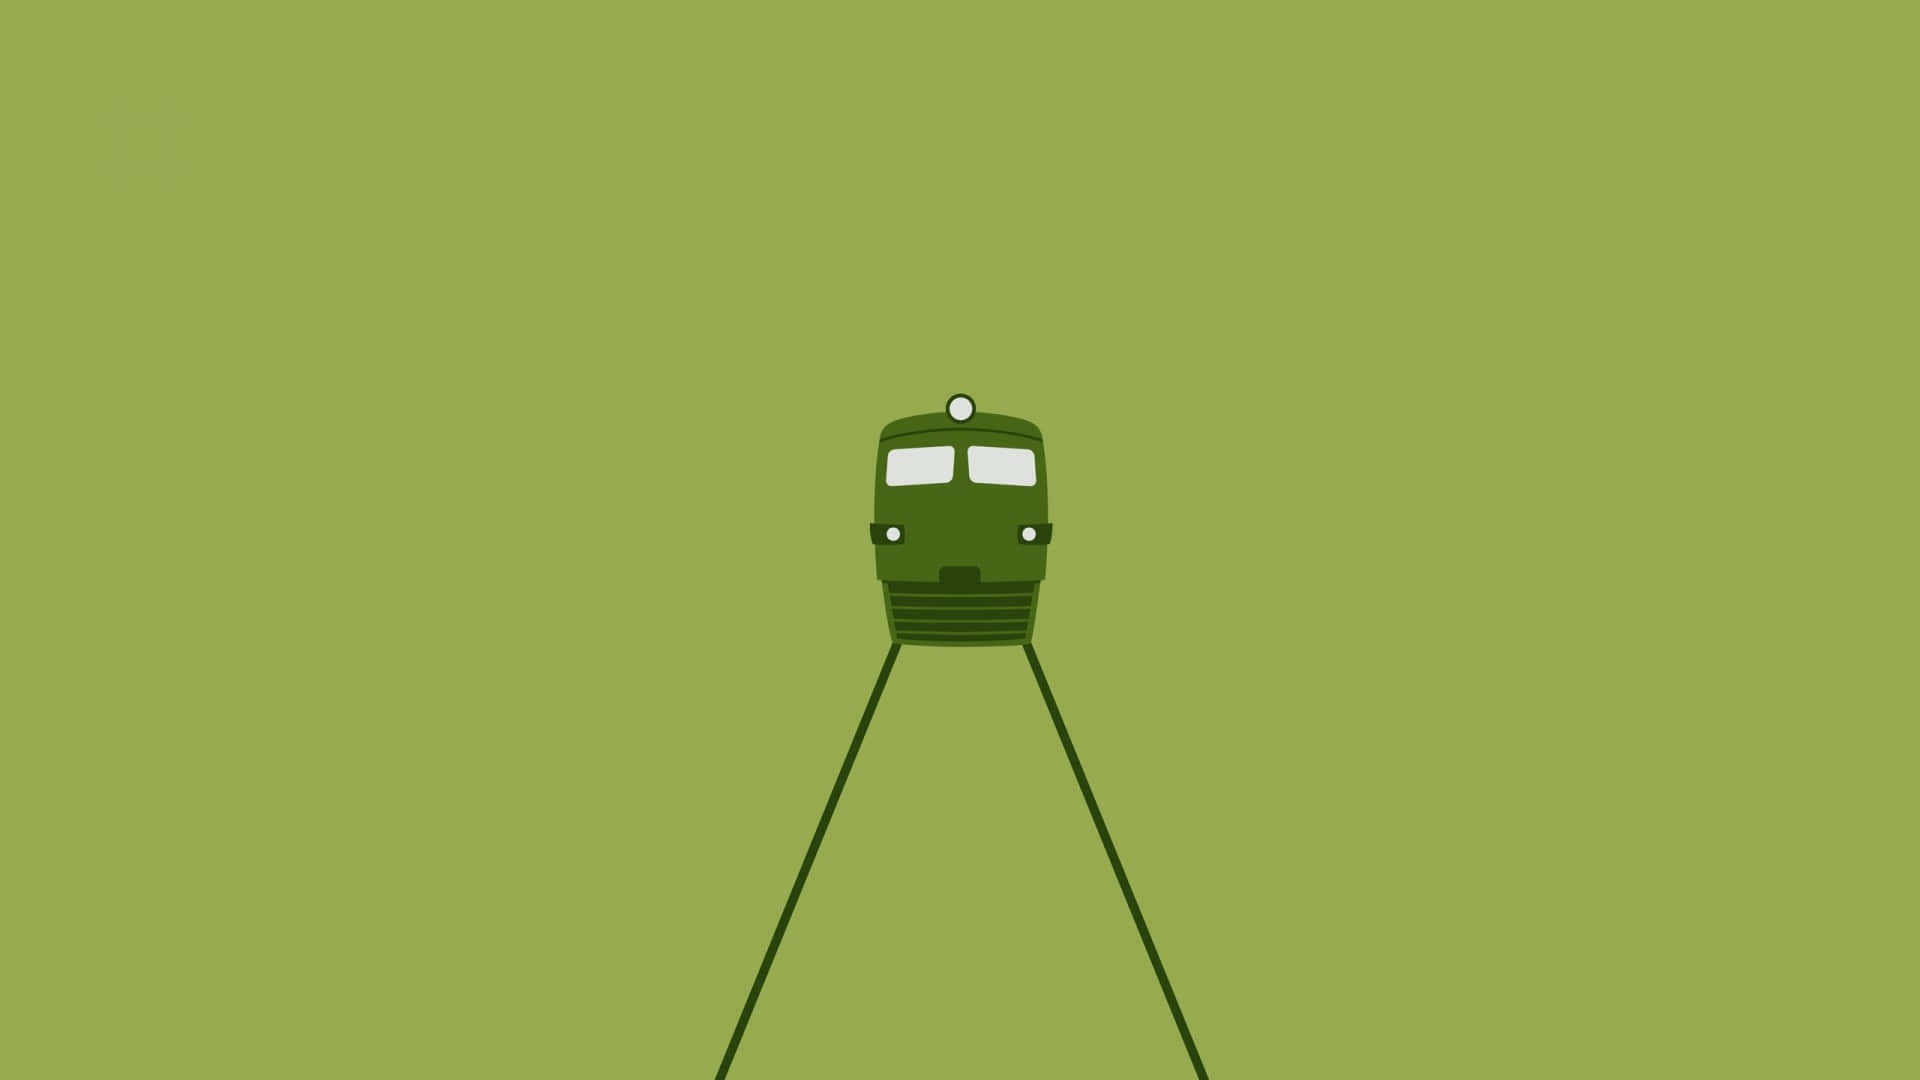 Aesthetic Green Minimal Train On Track Wallpaper